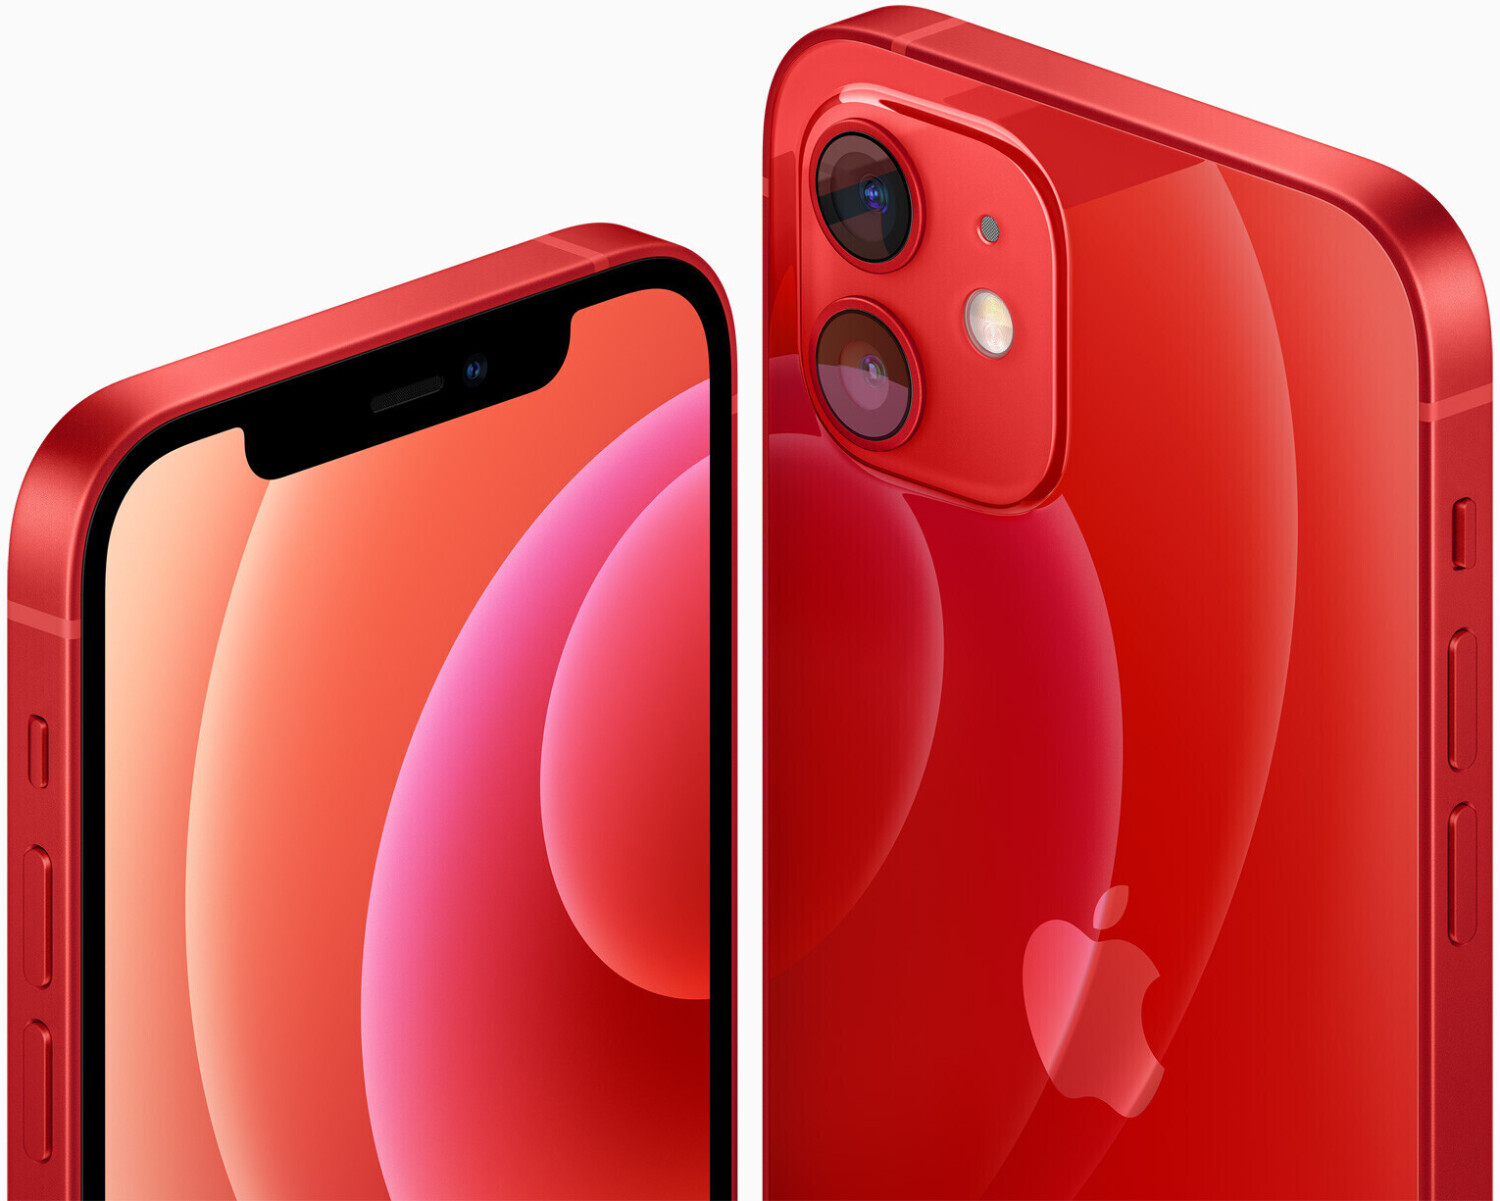 Compra Apple iPhone 12 64GB Rojo!